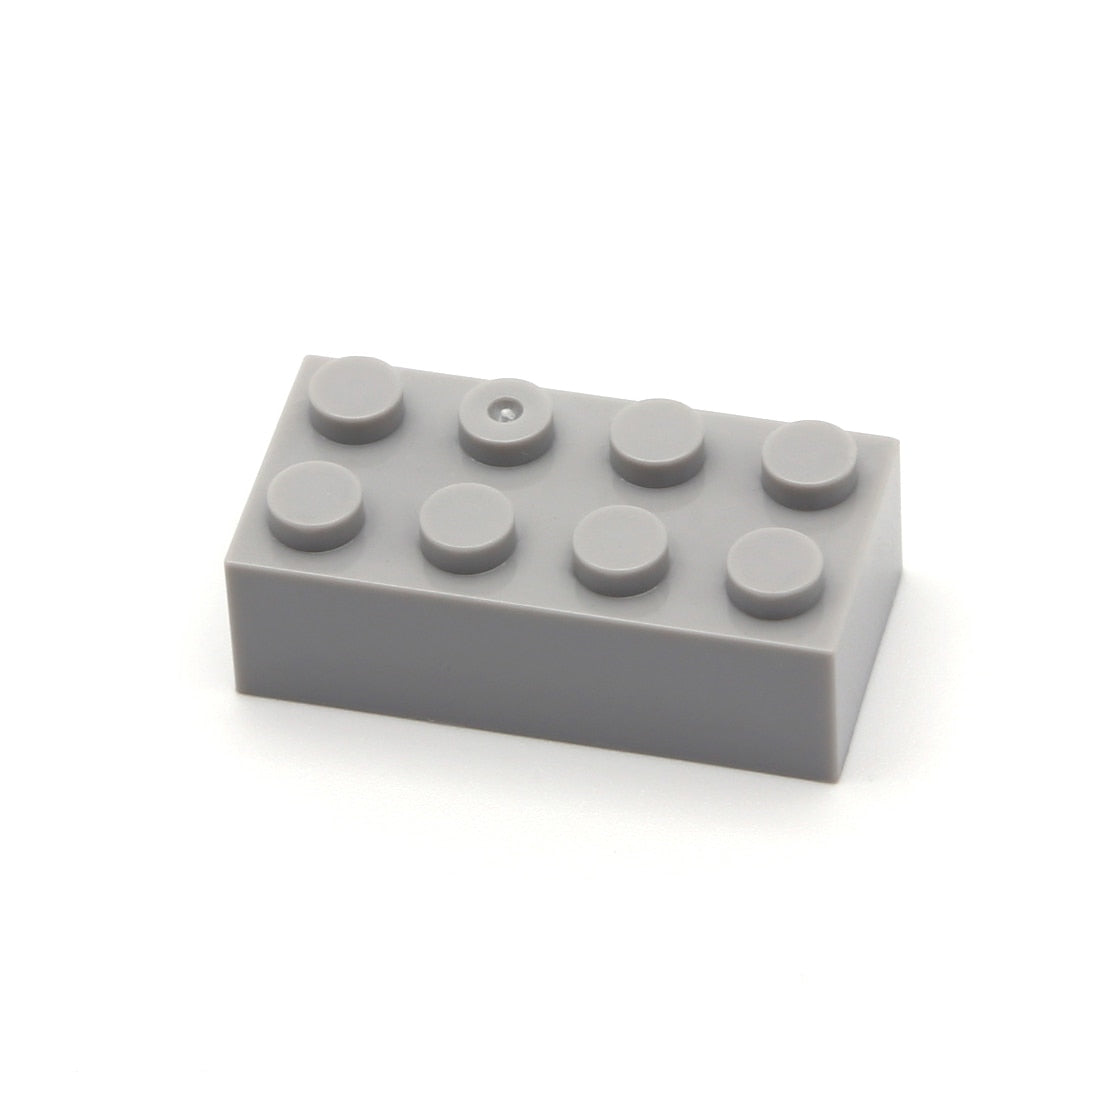 40pcs DIY Building Blocks Thick Figures Bricks 2x4 Dots Educational Creative Size Compatible With 3001 Plastic Toys for Children